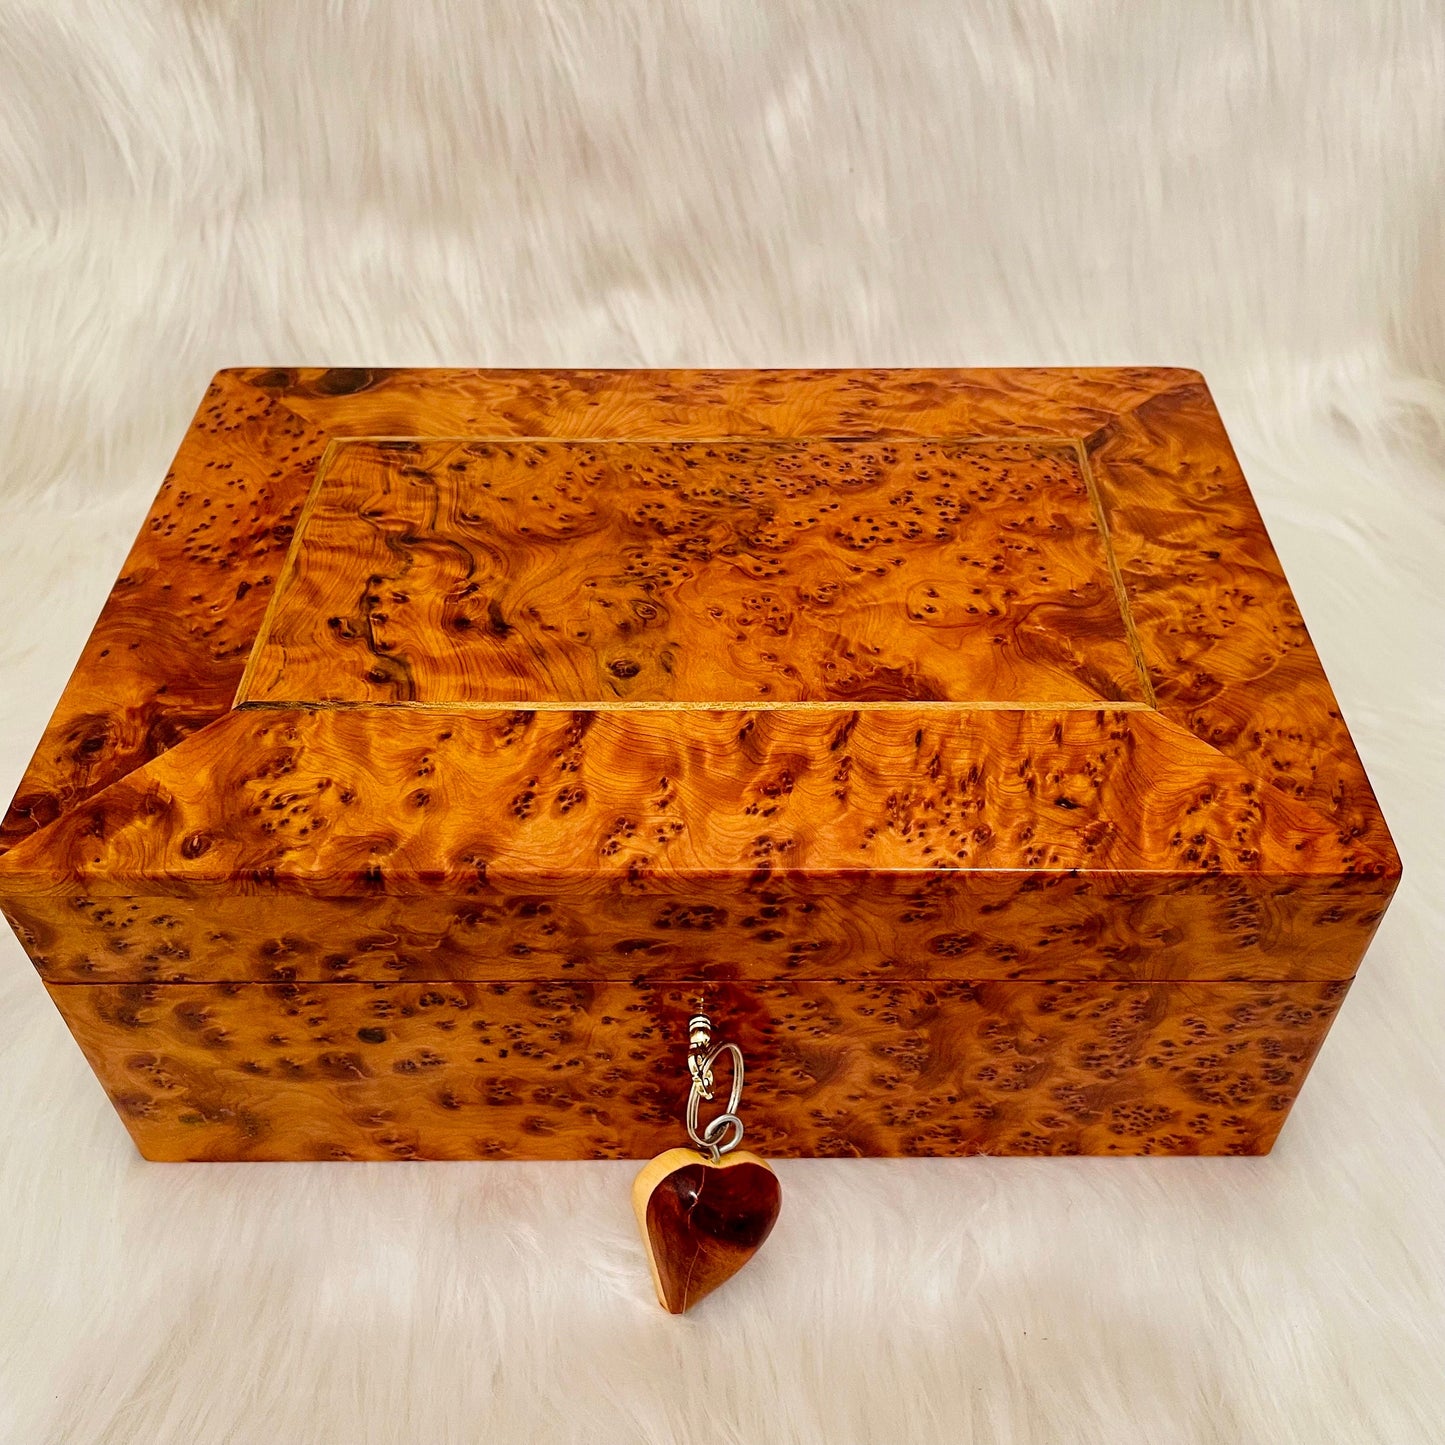 12"x8" Luxury lockable thuya burl wooden jewellery Box holder with key,Christmas Couples gift,Birthday,wedding Jewelry memory,decorative box